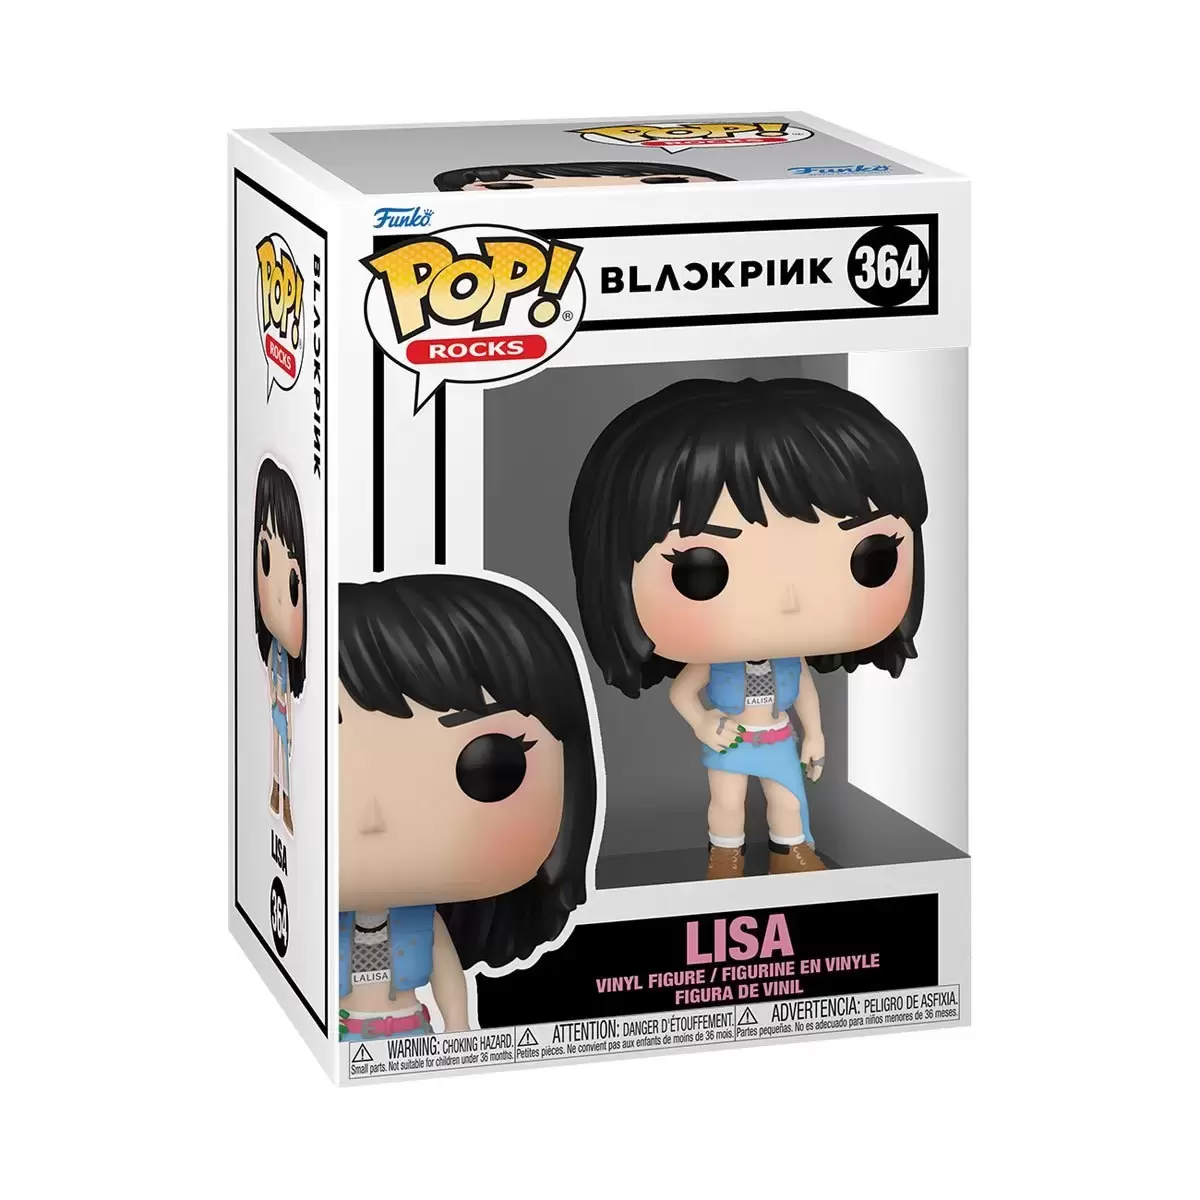 POP! Rocks - Blackpink - Lisa